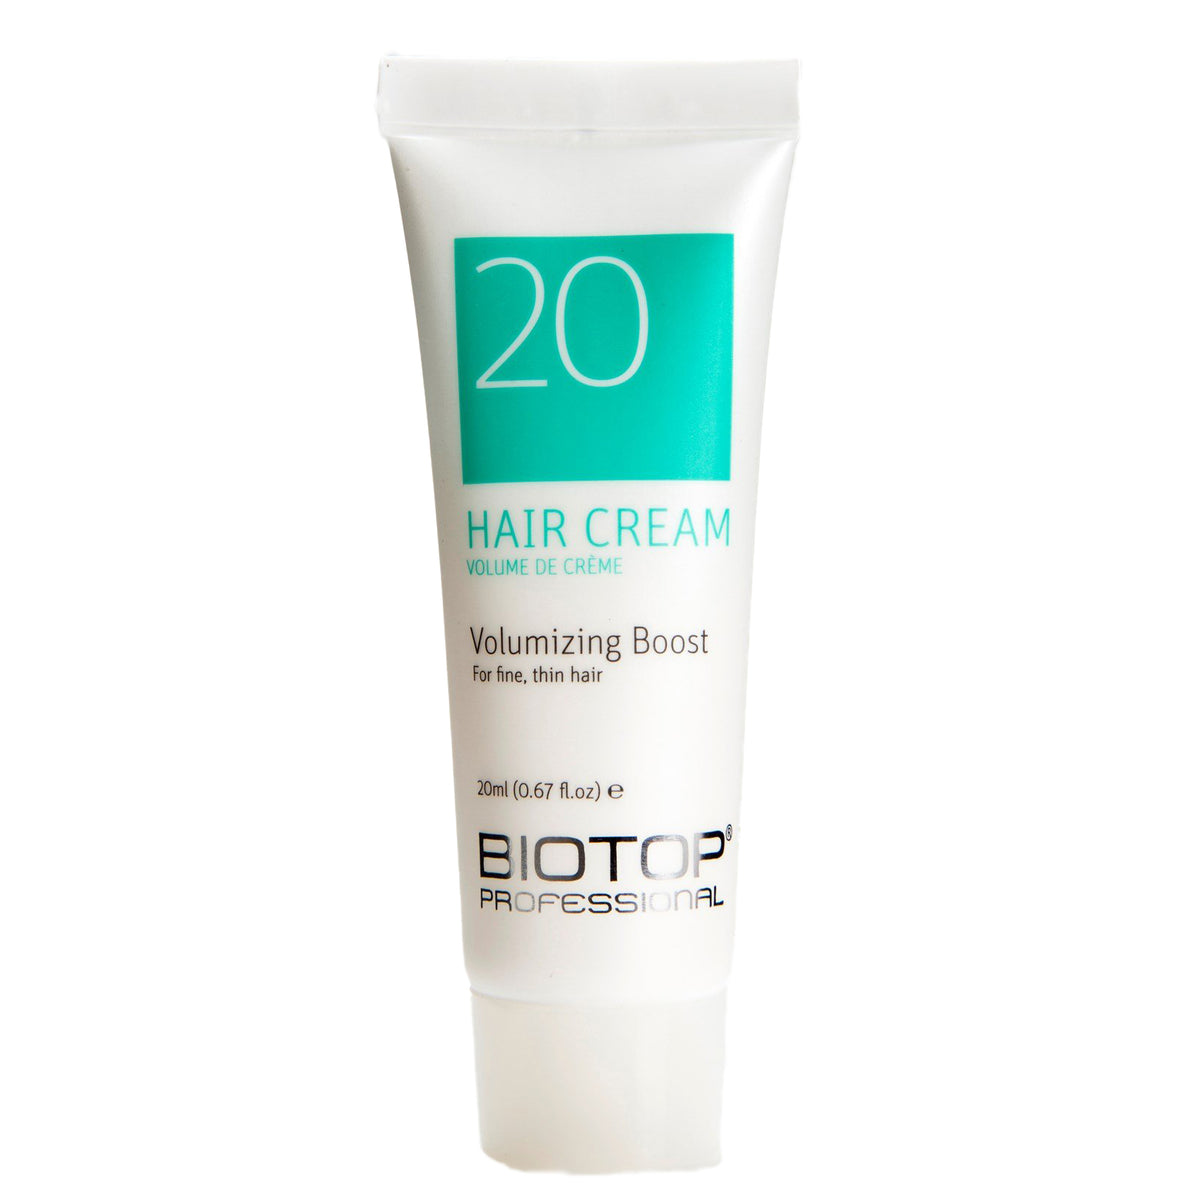 Biotop - 20 Volume Boost Hair Cream 20ml